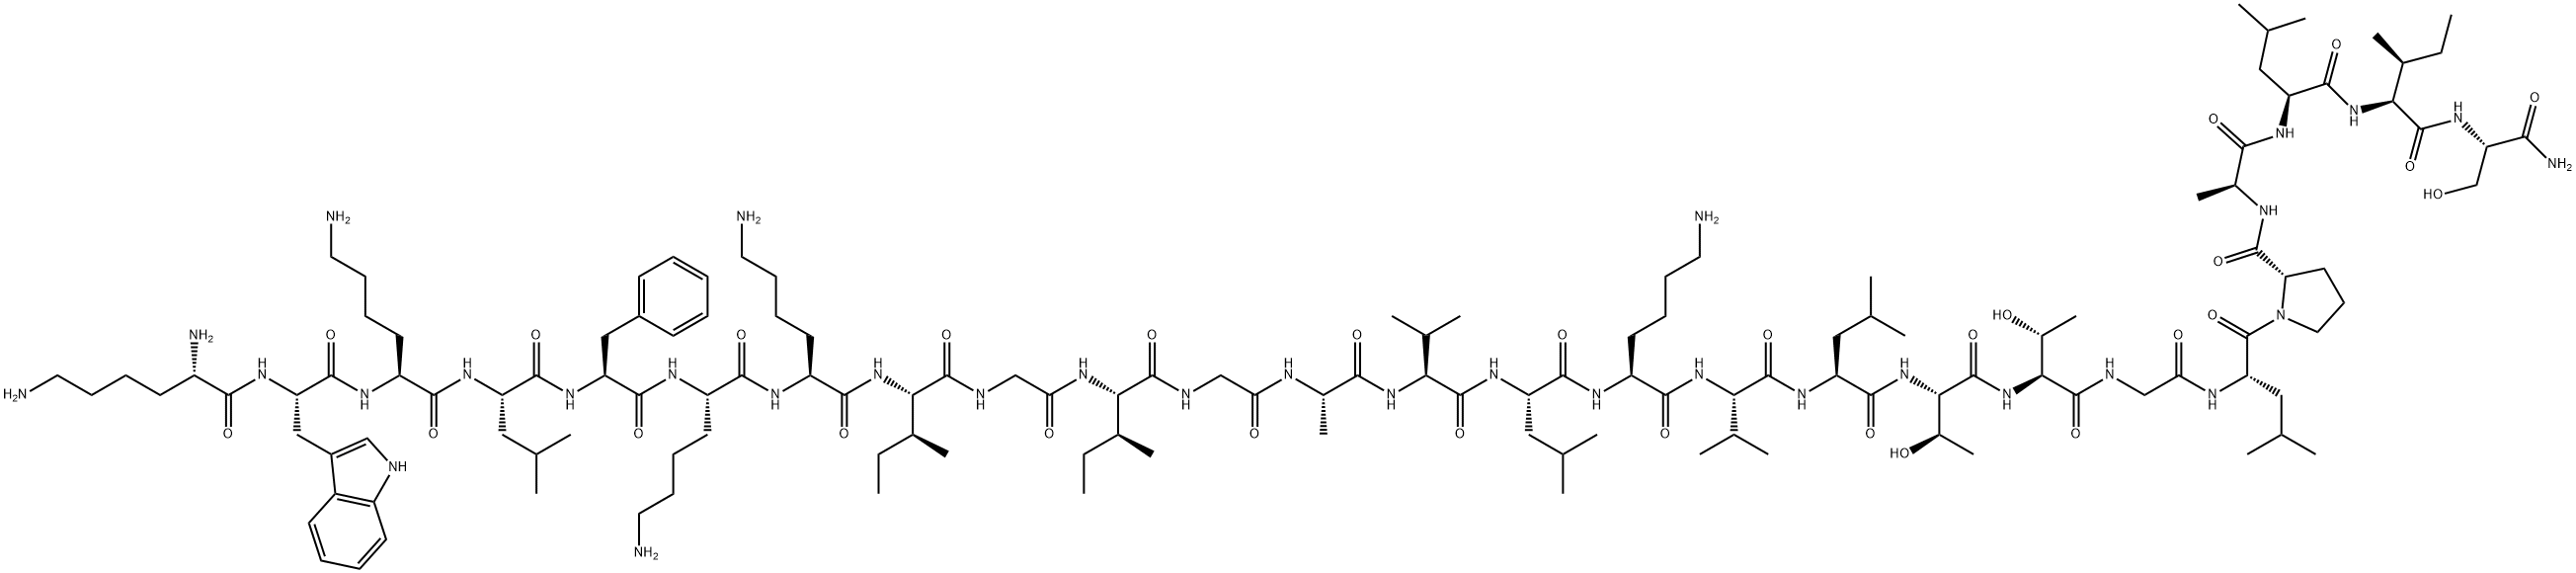 Cecropin A (1-8)-Melittin (1-18) amide H-Lys-Trp-Lys-Leu-Phe-Lys-Lys-Ile-Gly-Ile-Gly-Ala-Val-Leu-Lys-Val-Leu-Thr-Thr-Gly-Leu-Pro-Ala-Leu-Ile-Ser-NH2 Structure